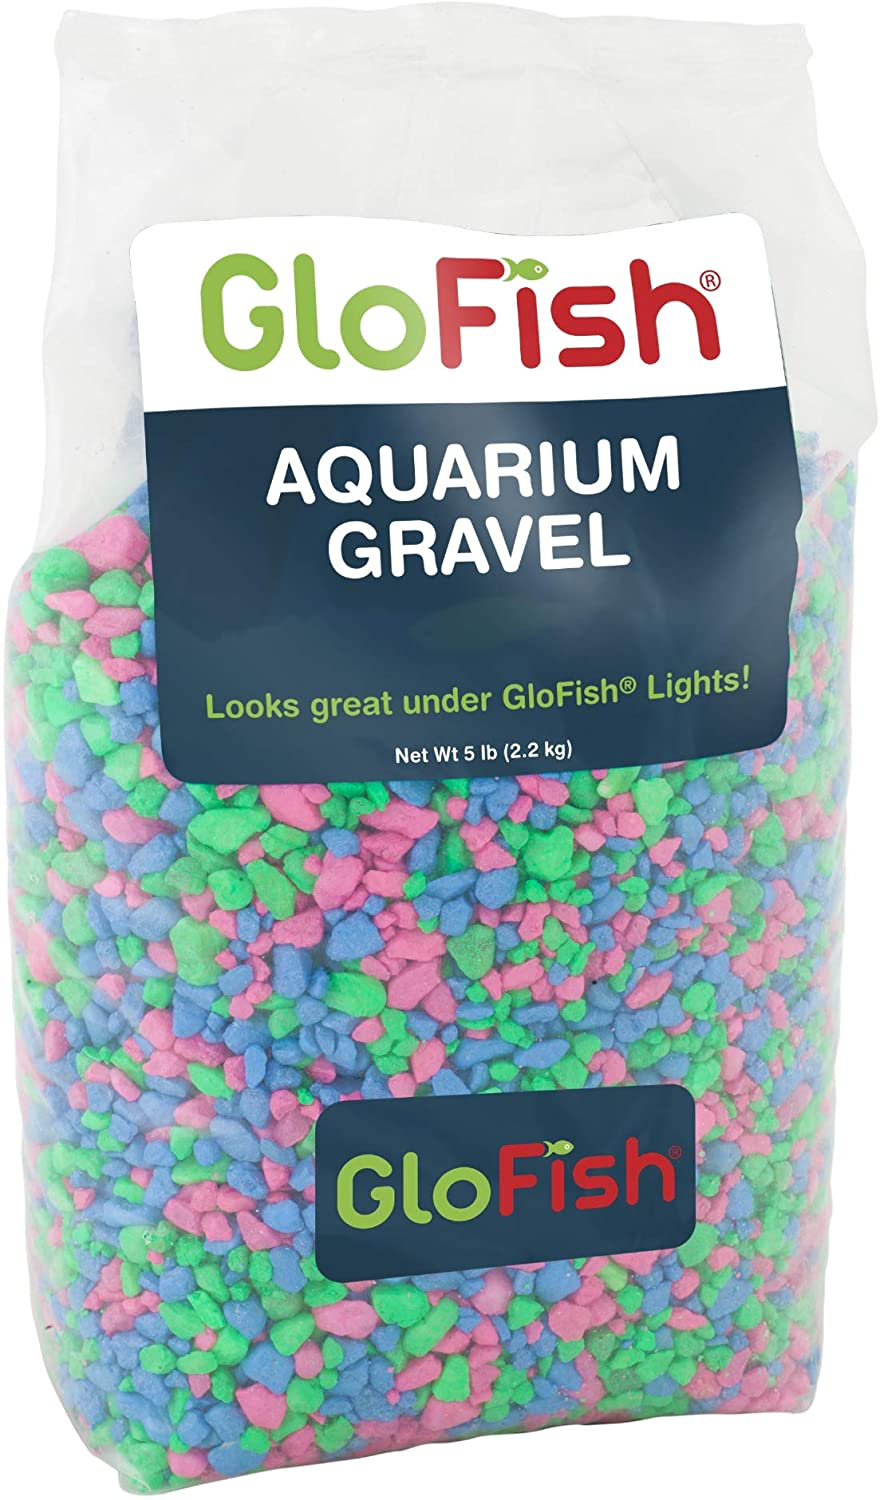 Glofish Aquarium Gravel, Fluorescent Colors, Complements Glofish Tanks, 5-Pound Bag Animals & Pet Supplies > Pet Supplies > Fish Supplies > Aquarium Gravel & Substrates GloFish Pink/Green/Blue Fluorescent  